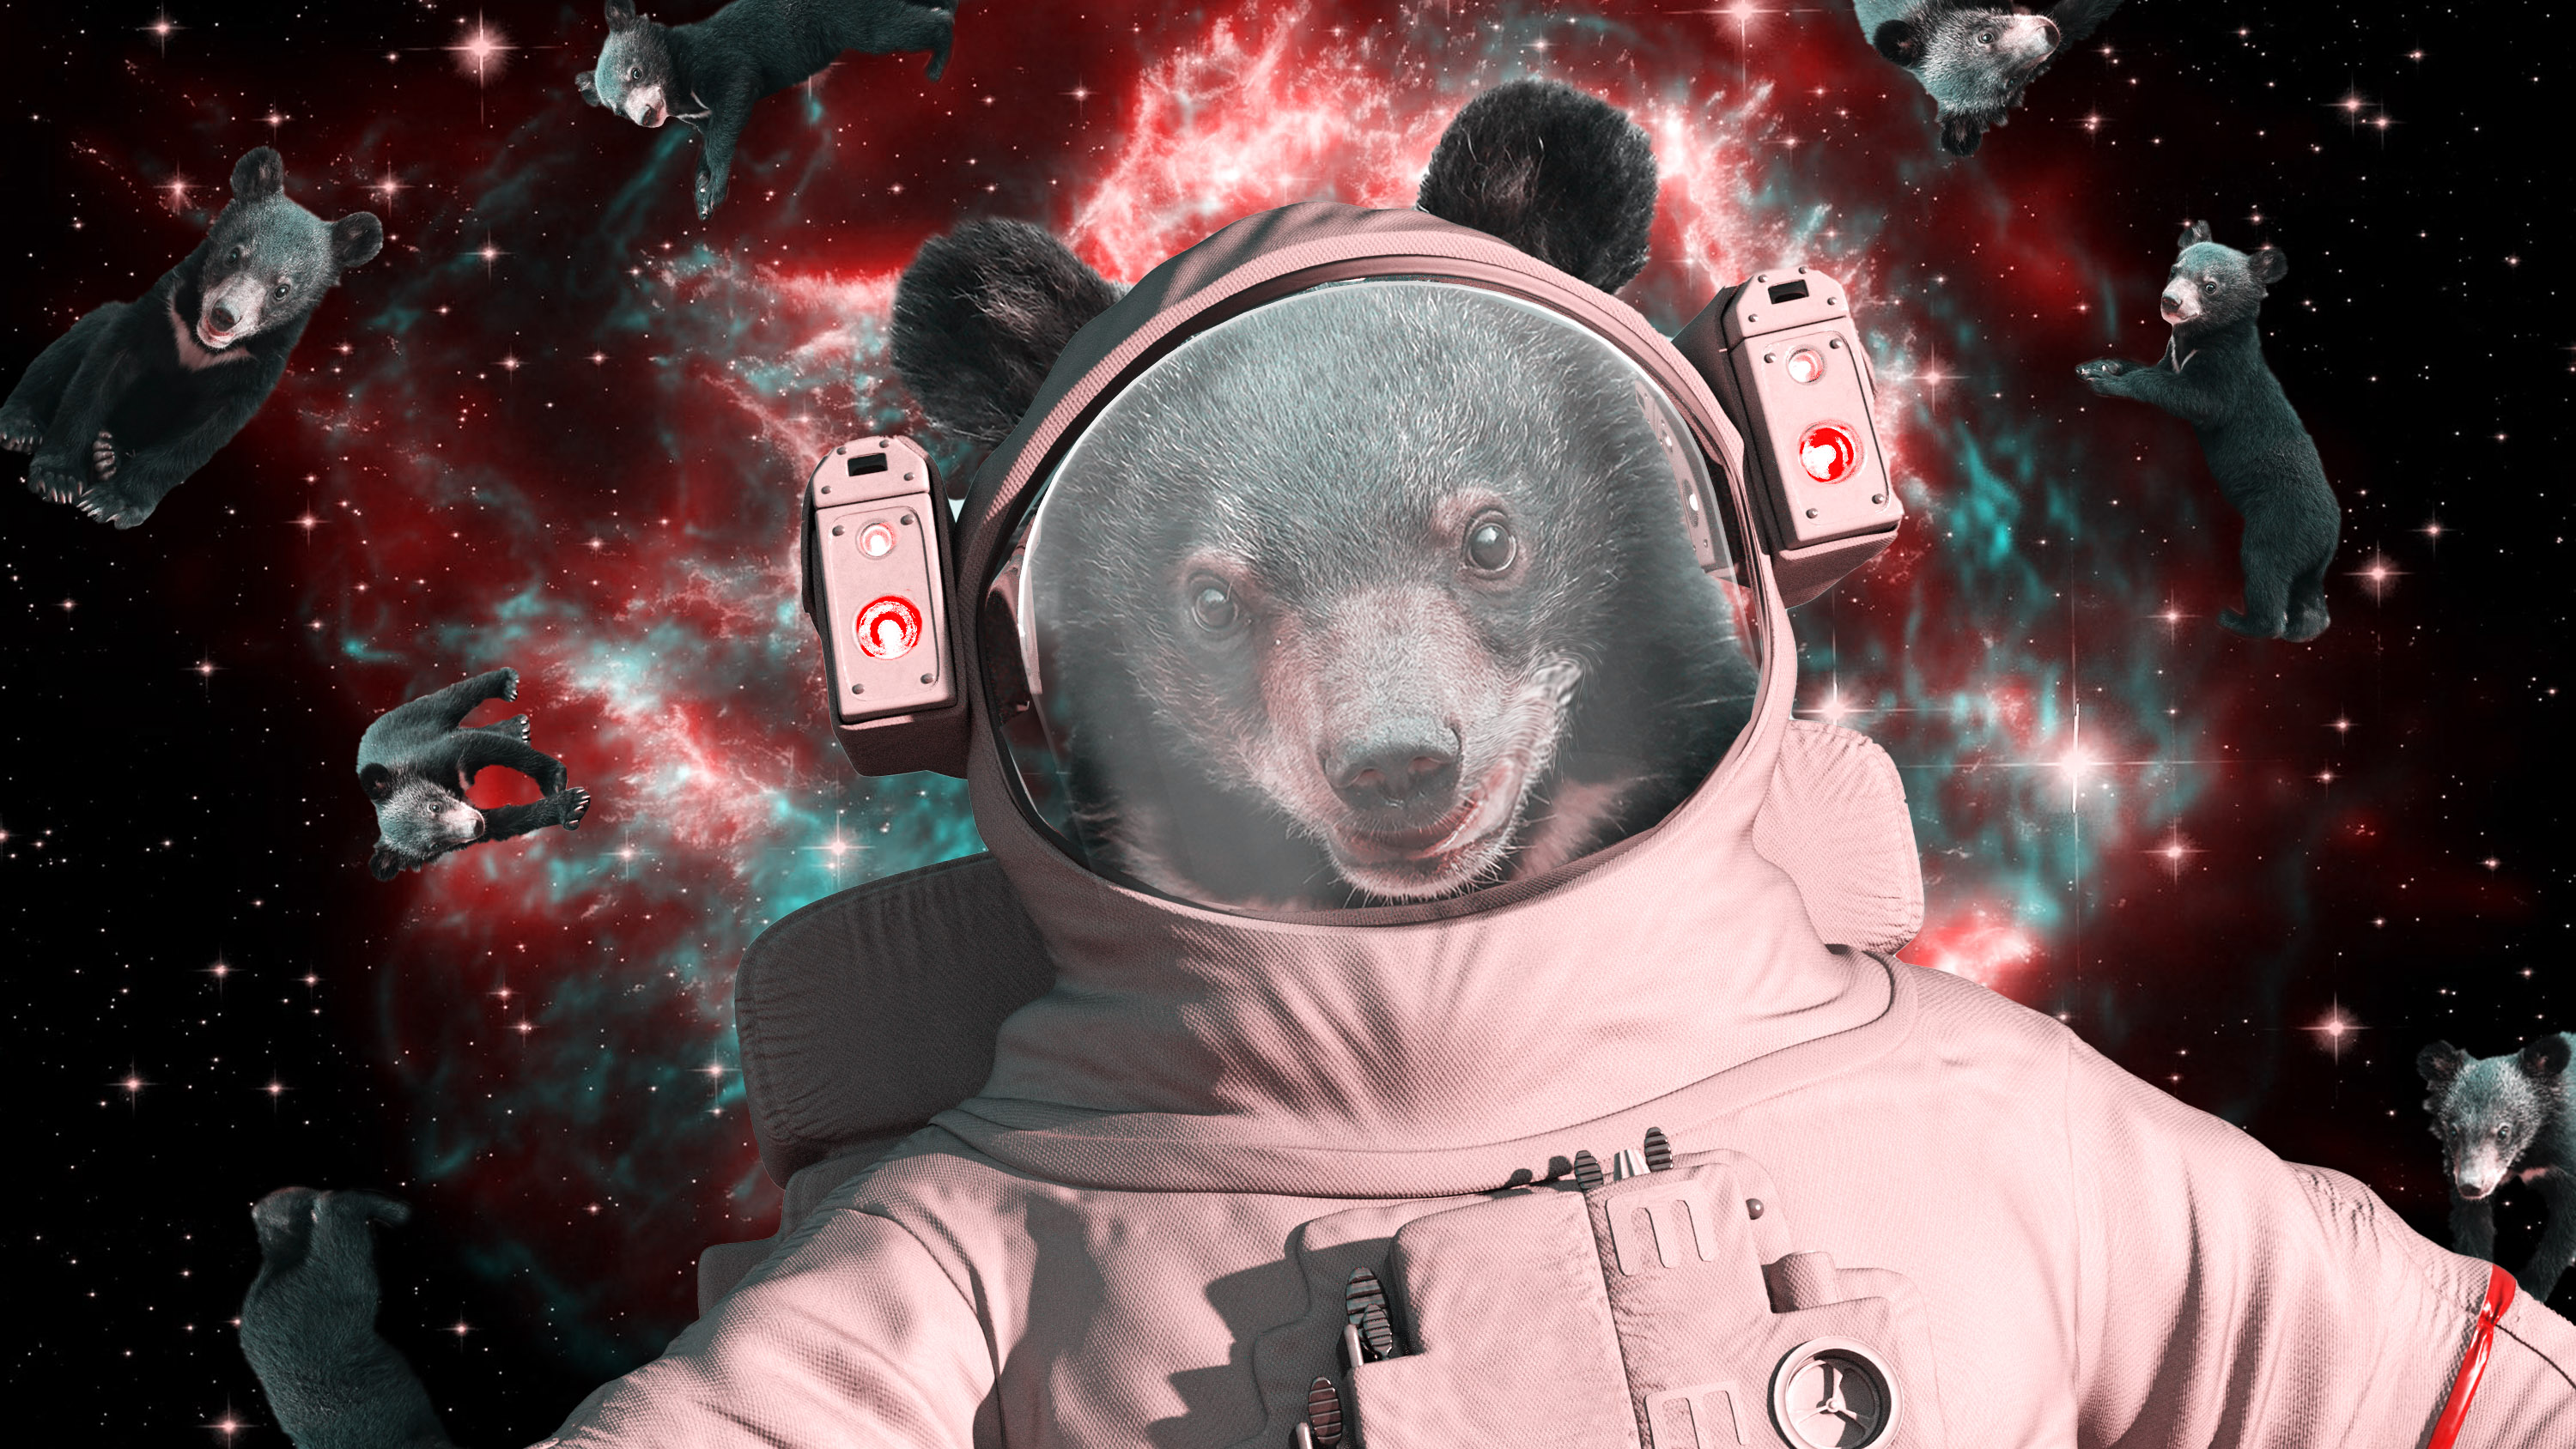 space bears floating in space